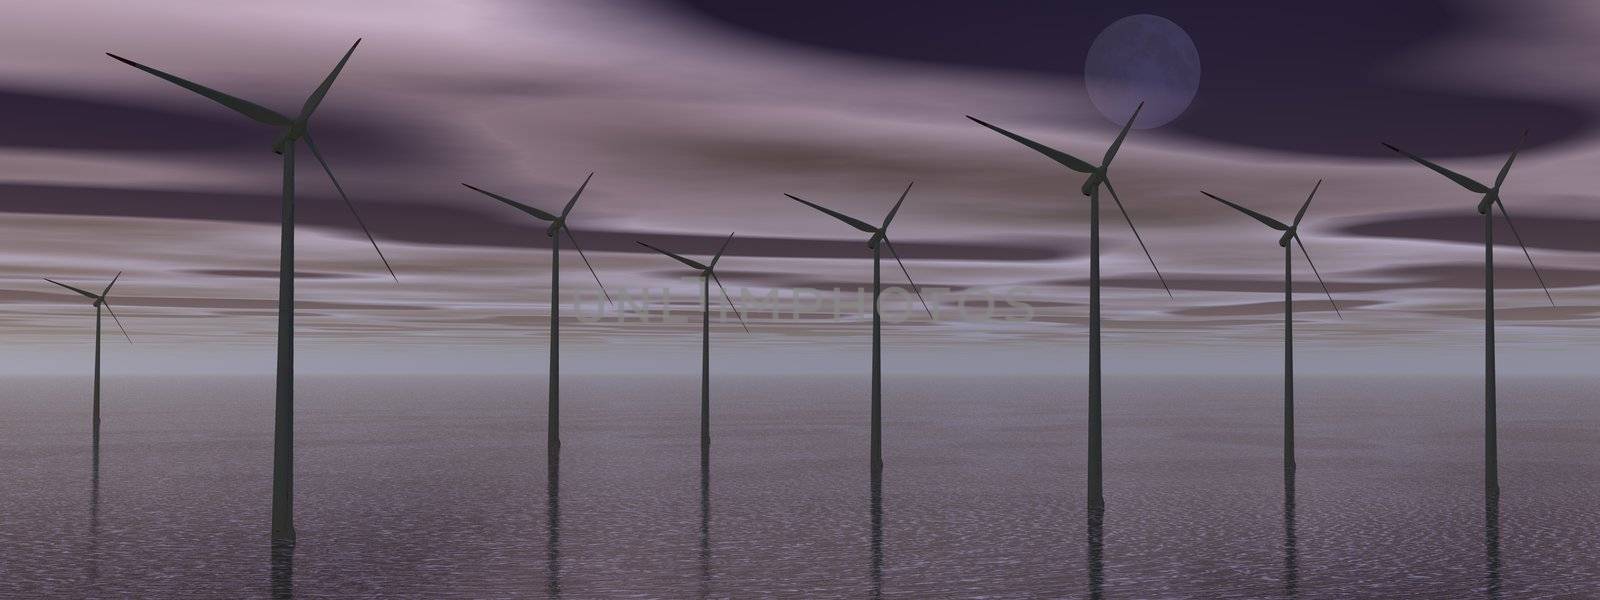 Wind turbines by night by Elenaphotos21